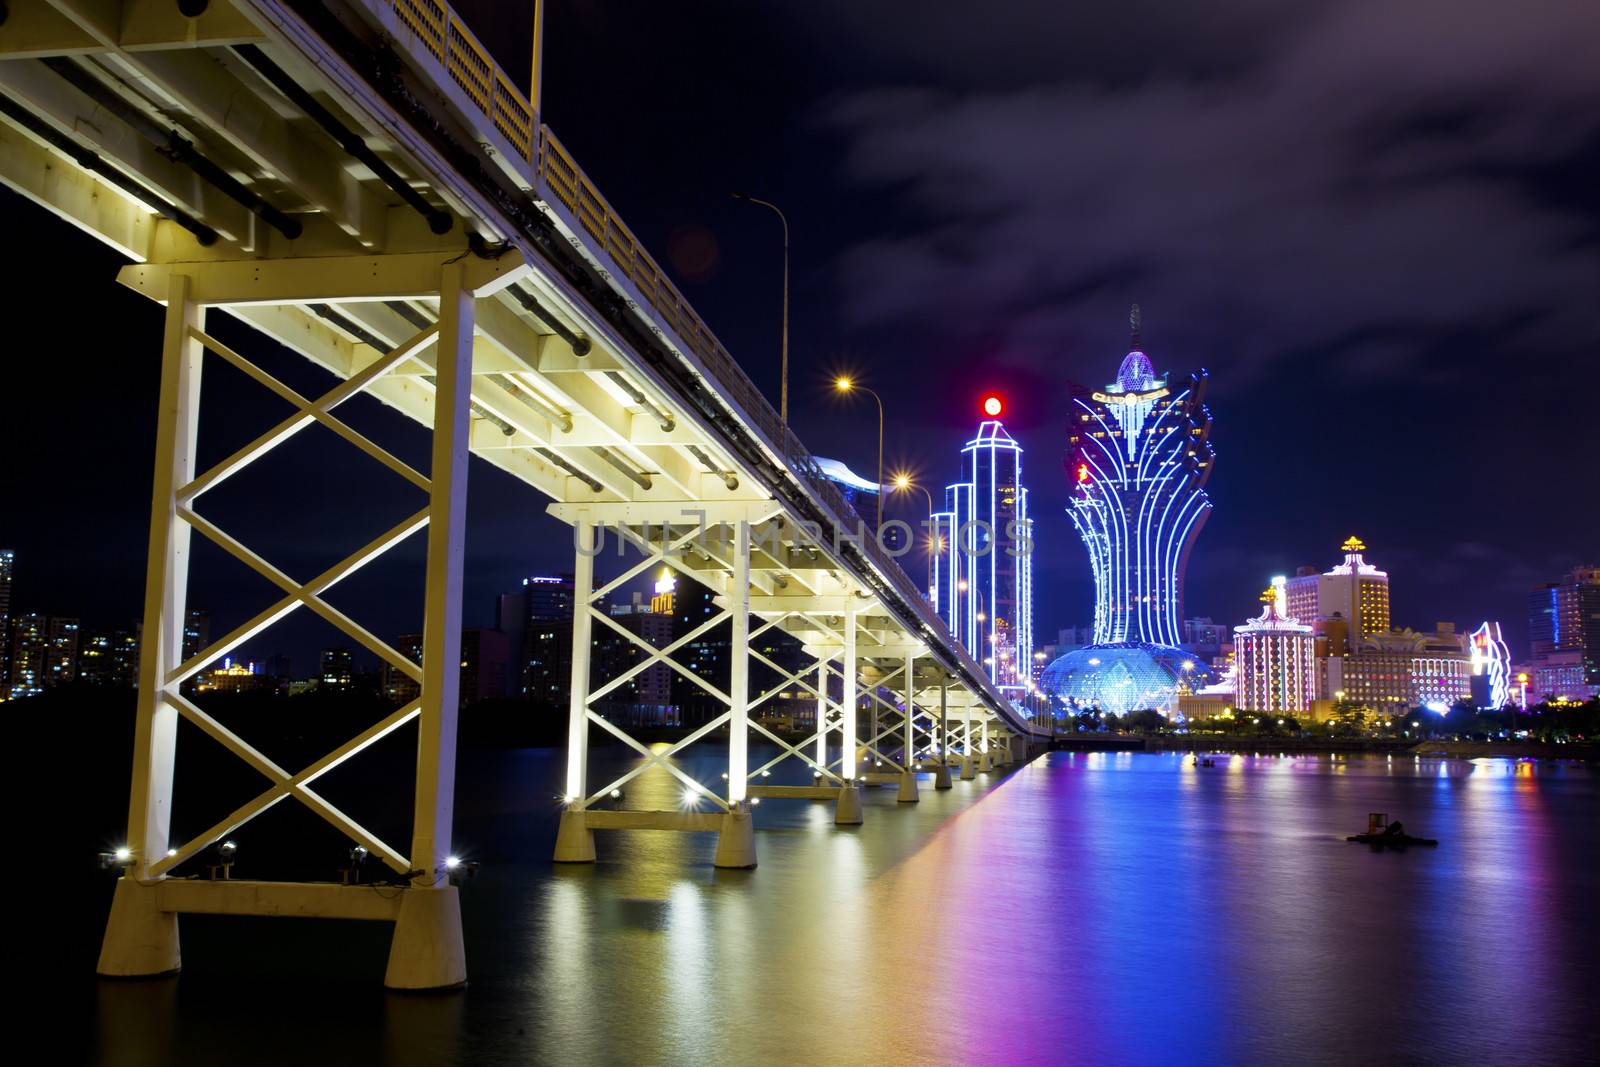 Macau casino at night  by kawing921